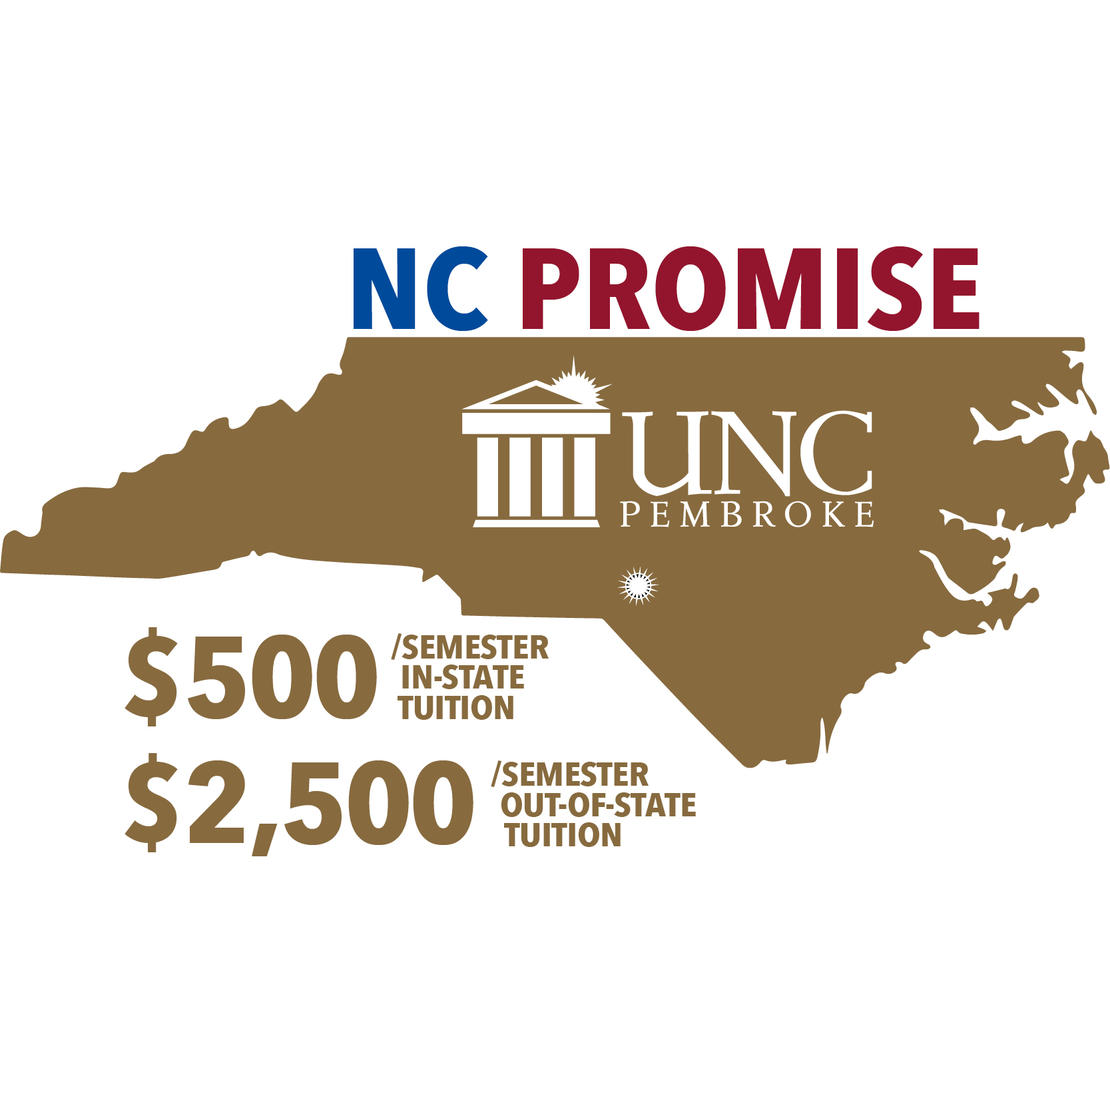 UNC Pembroke is an NC Promise Institution